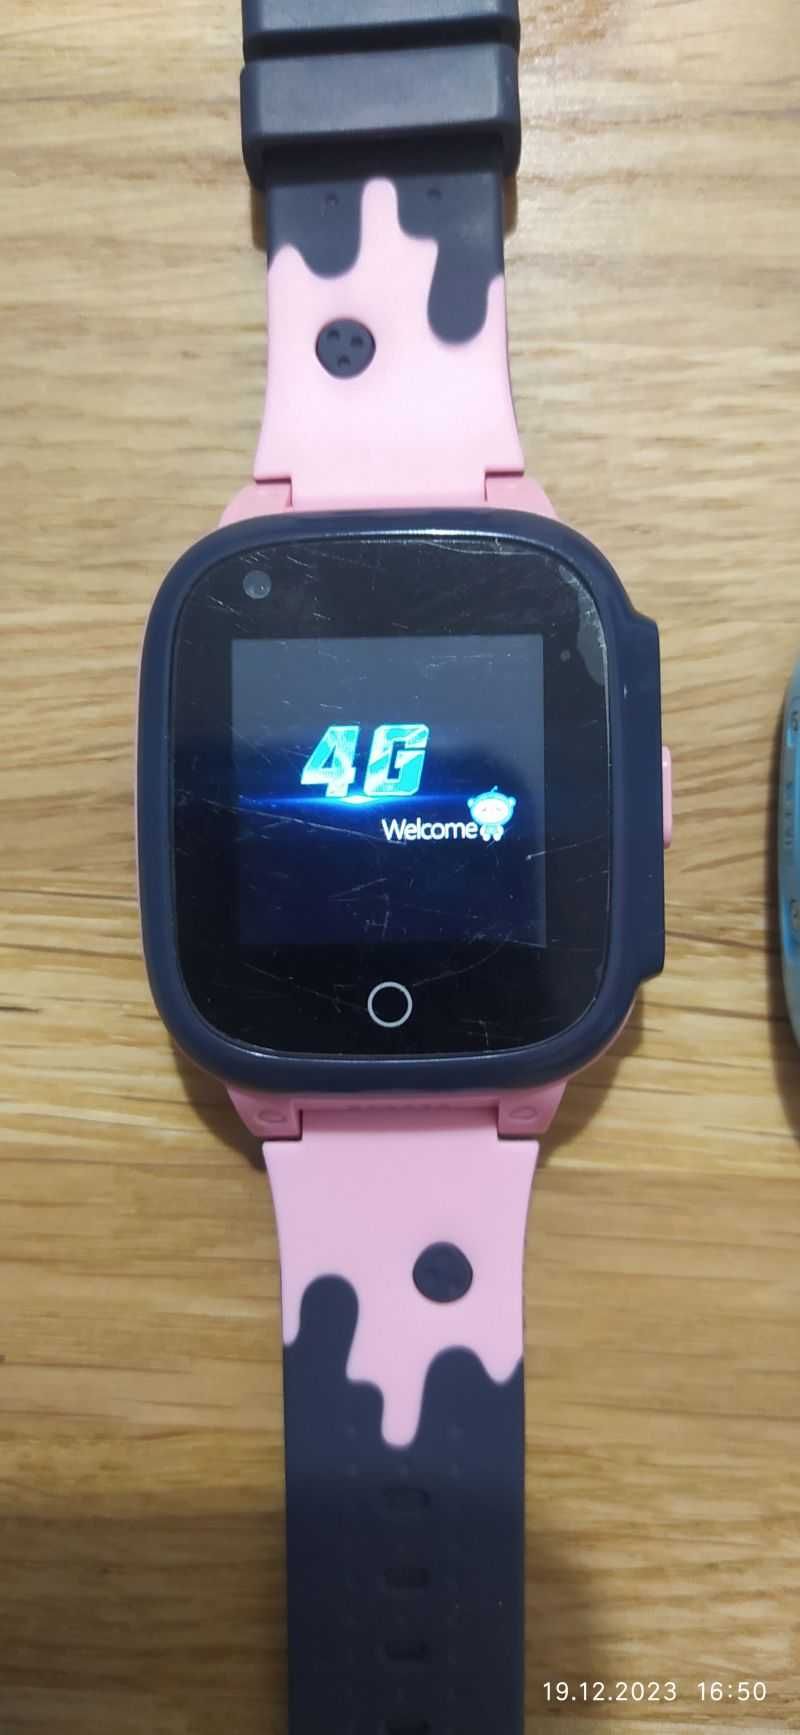 Smartwatch KidWatch model KT11 4G